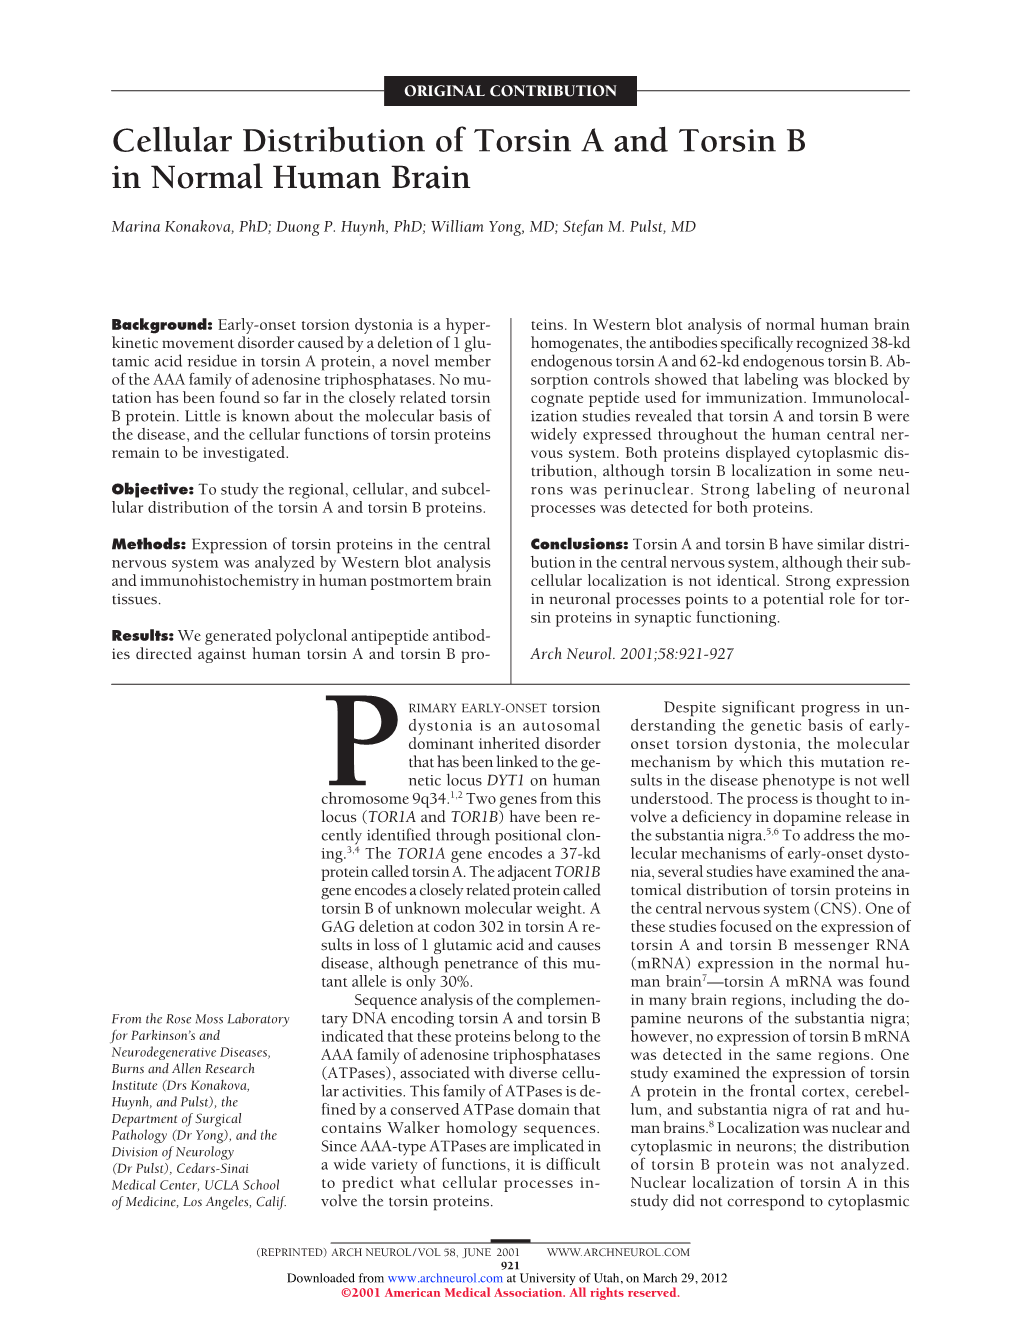 Cellular Distribution of Torsin a and Torsin B in Normal Human Brain